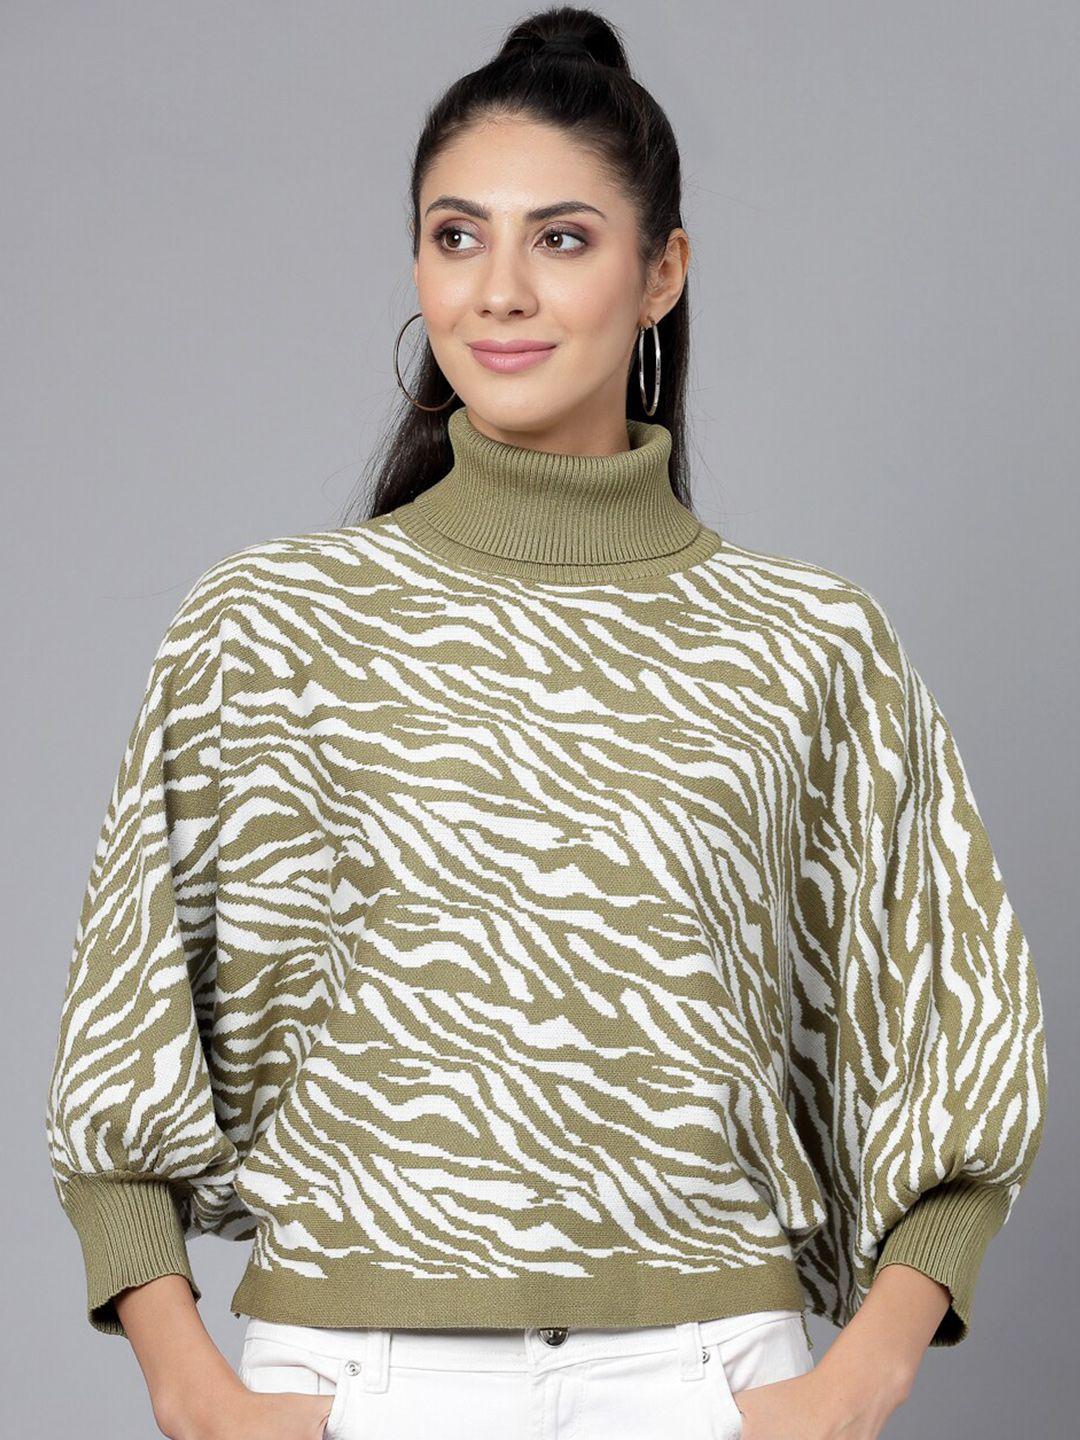 mafadeny-animal-printed-turtle-neck-pullover-sweater